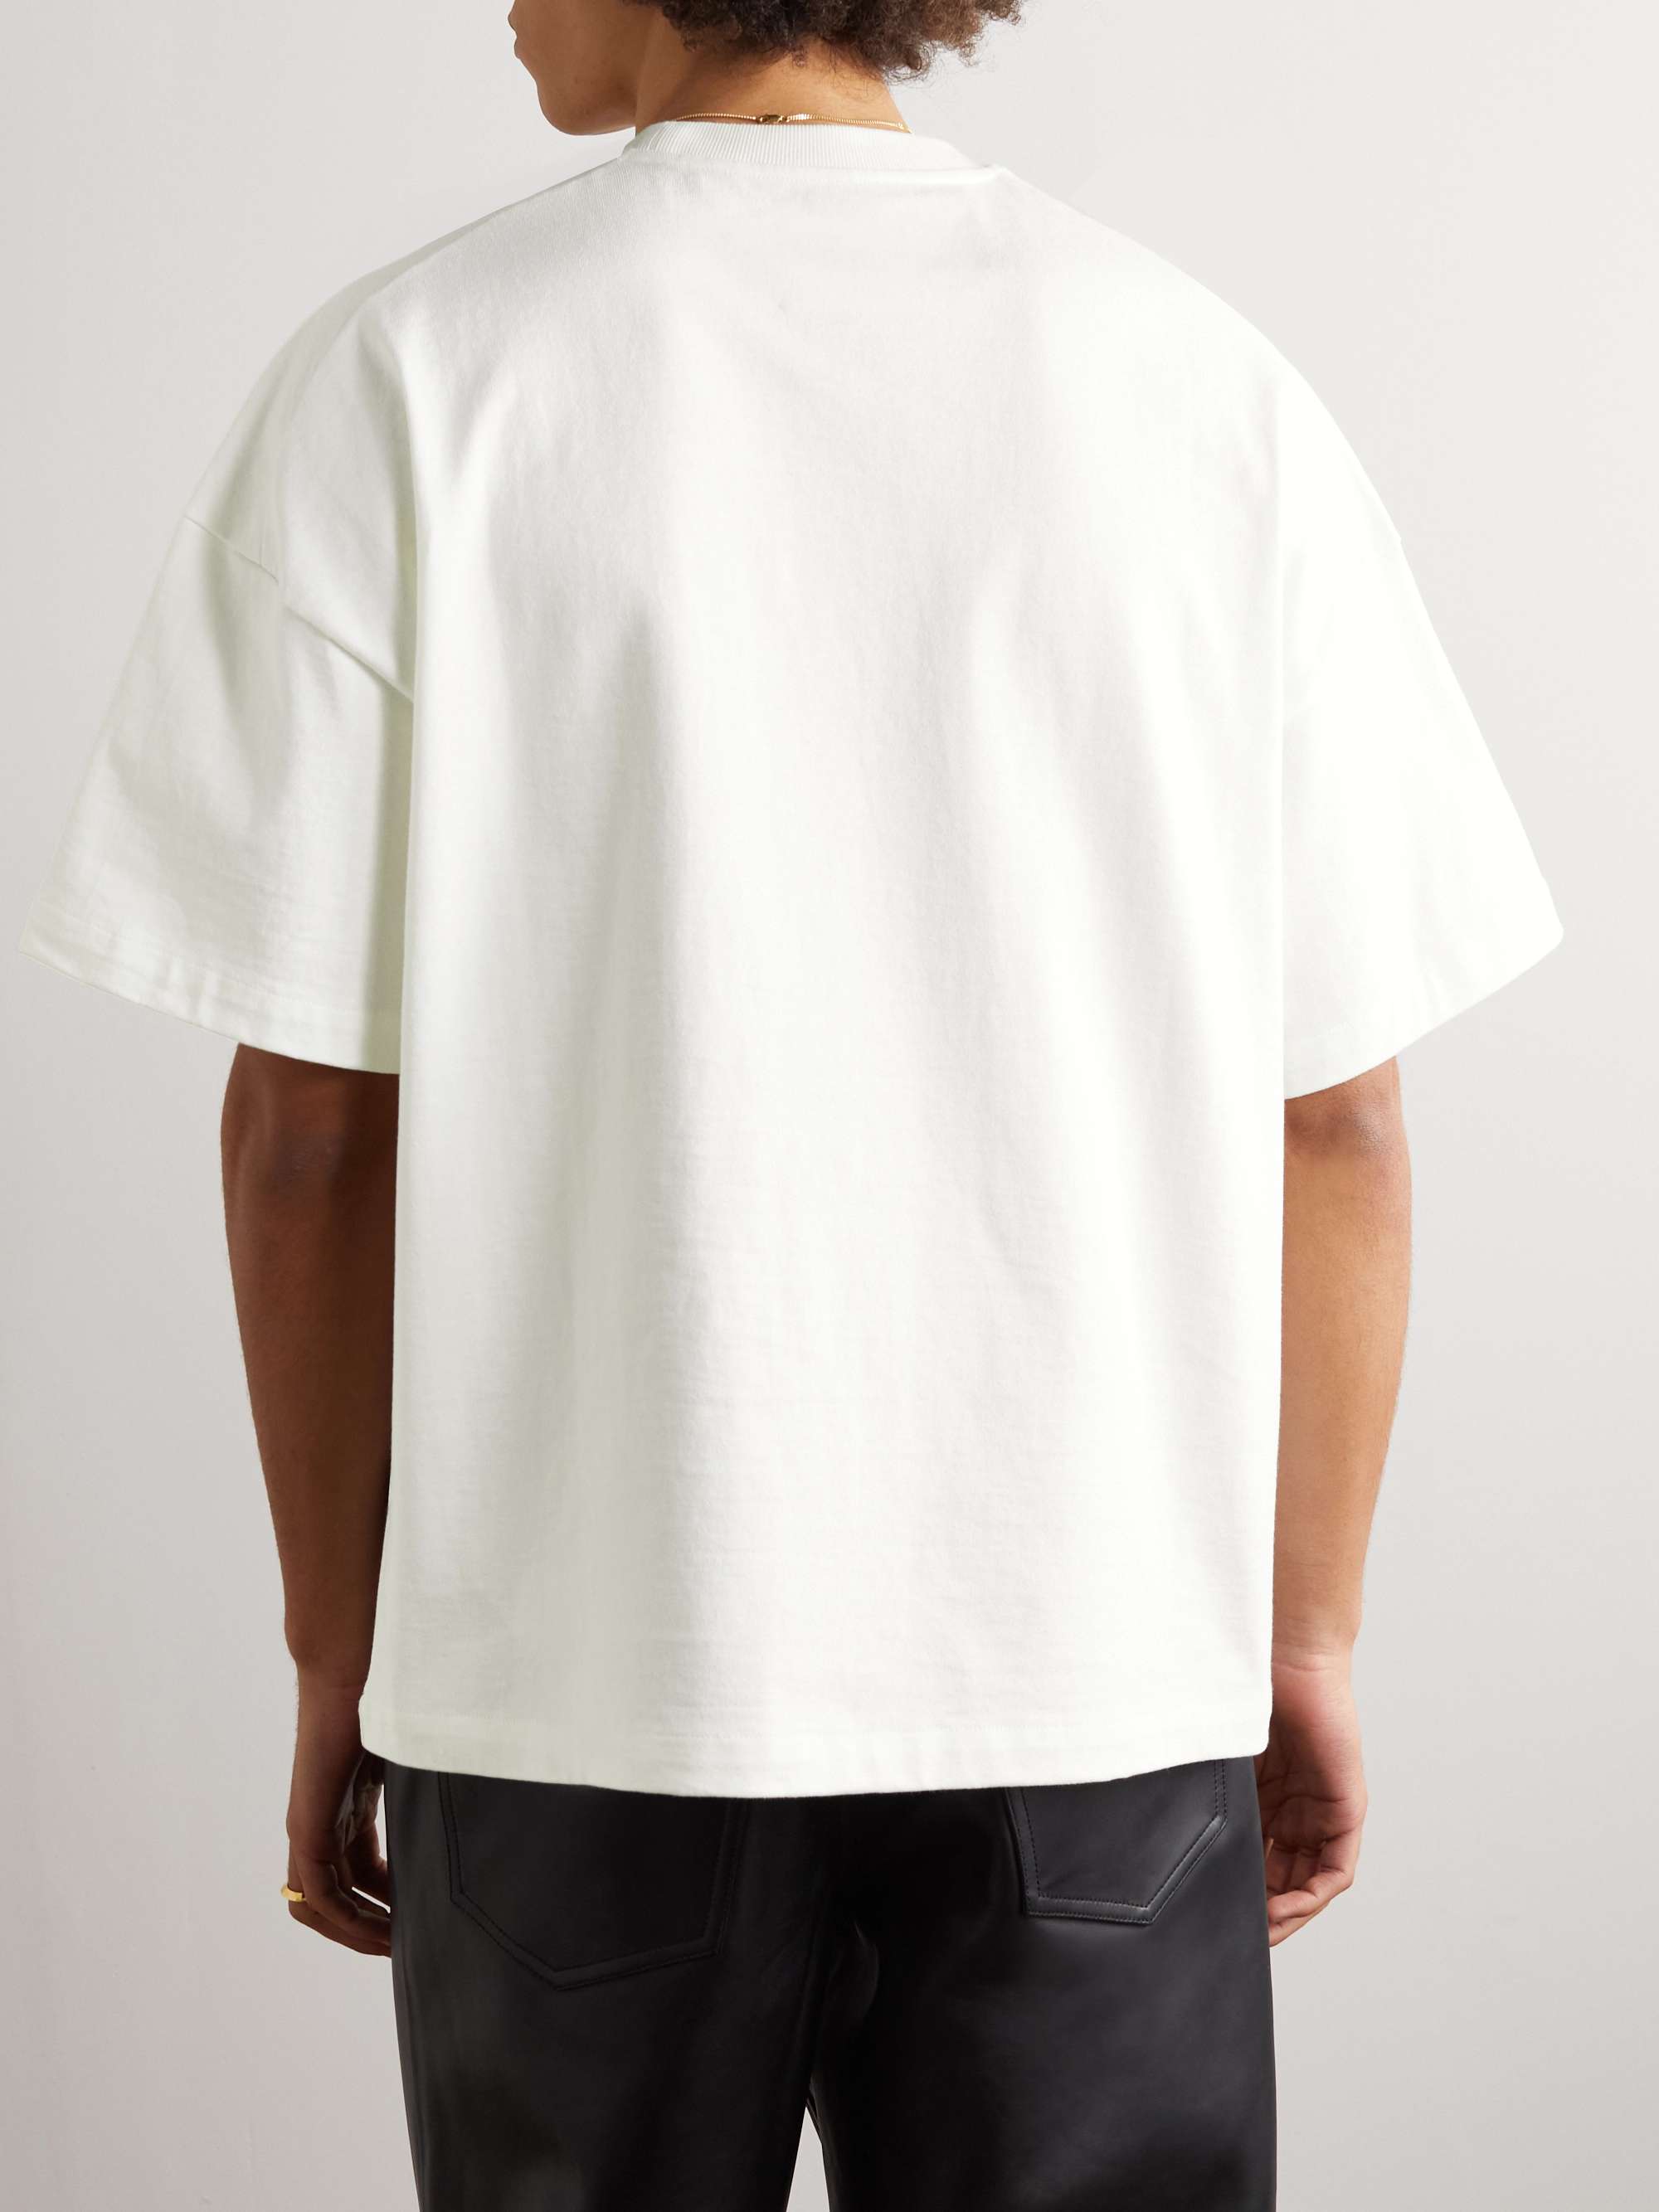 JIL SANDER Logo-Printed Cotton-Jersey T-Shirt